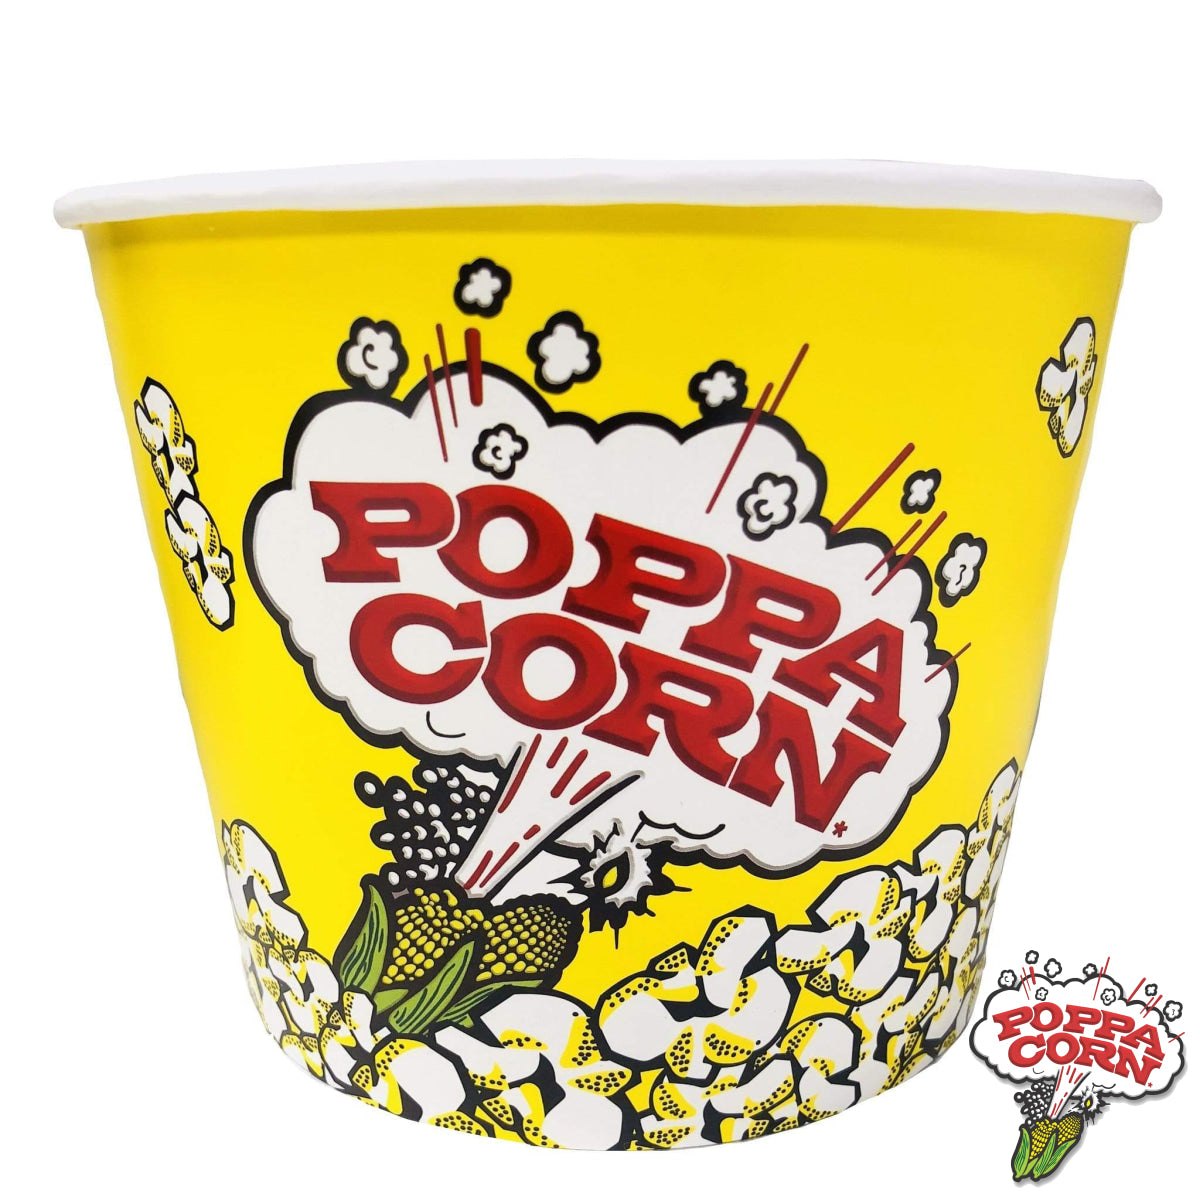 CUP085 - Rolled Rim Popcorn Cups - X Large 85 oz - 150/Case - Poppa Corn Corp